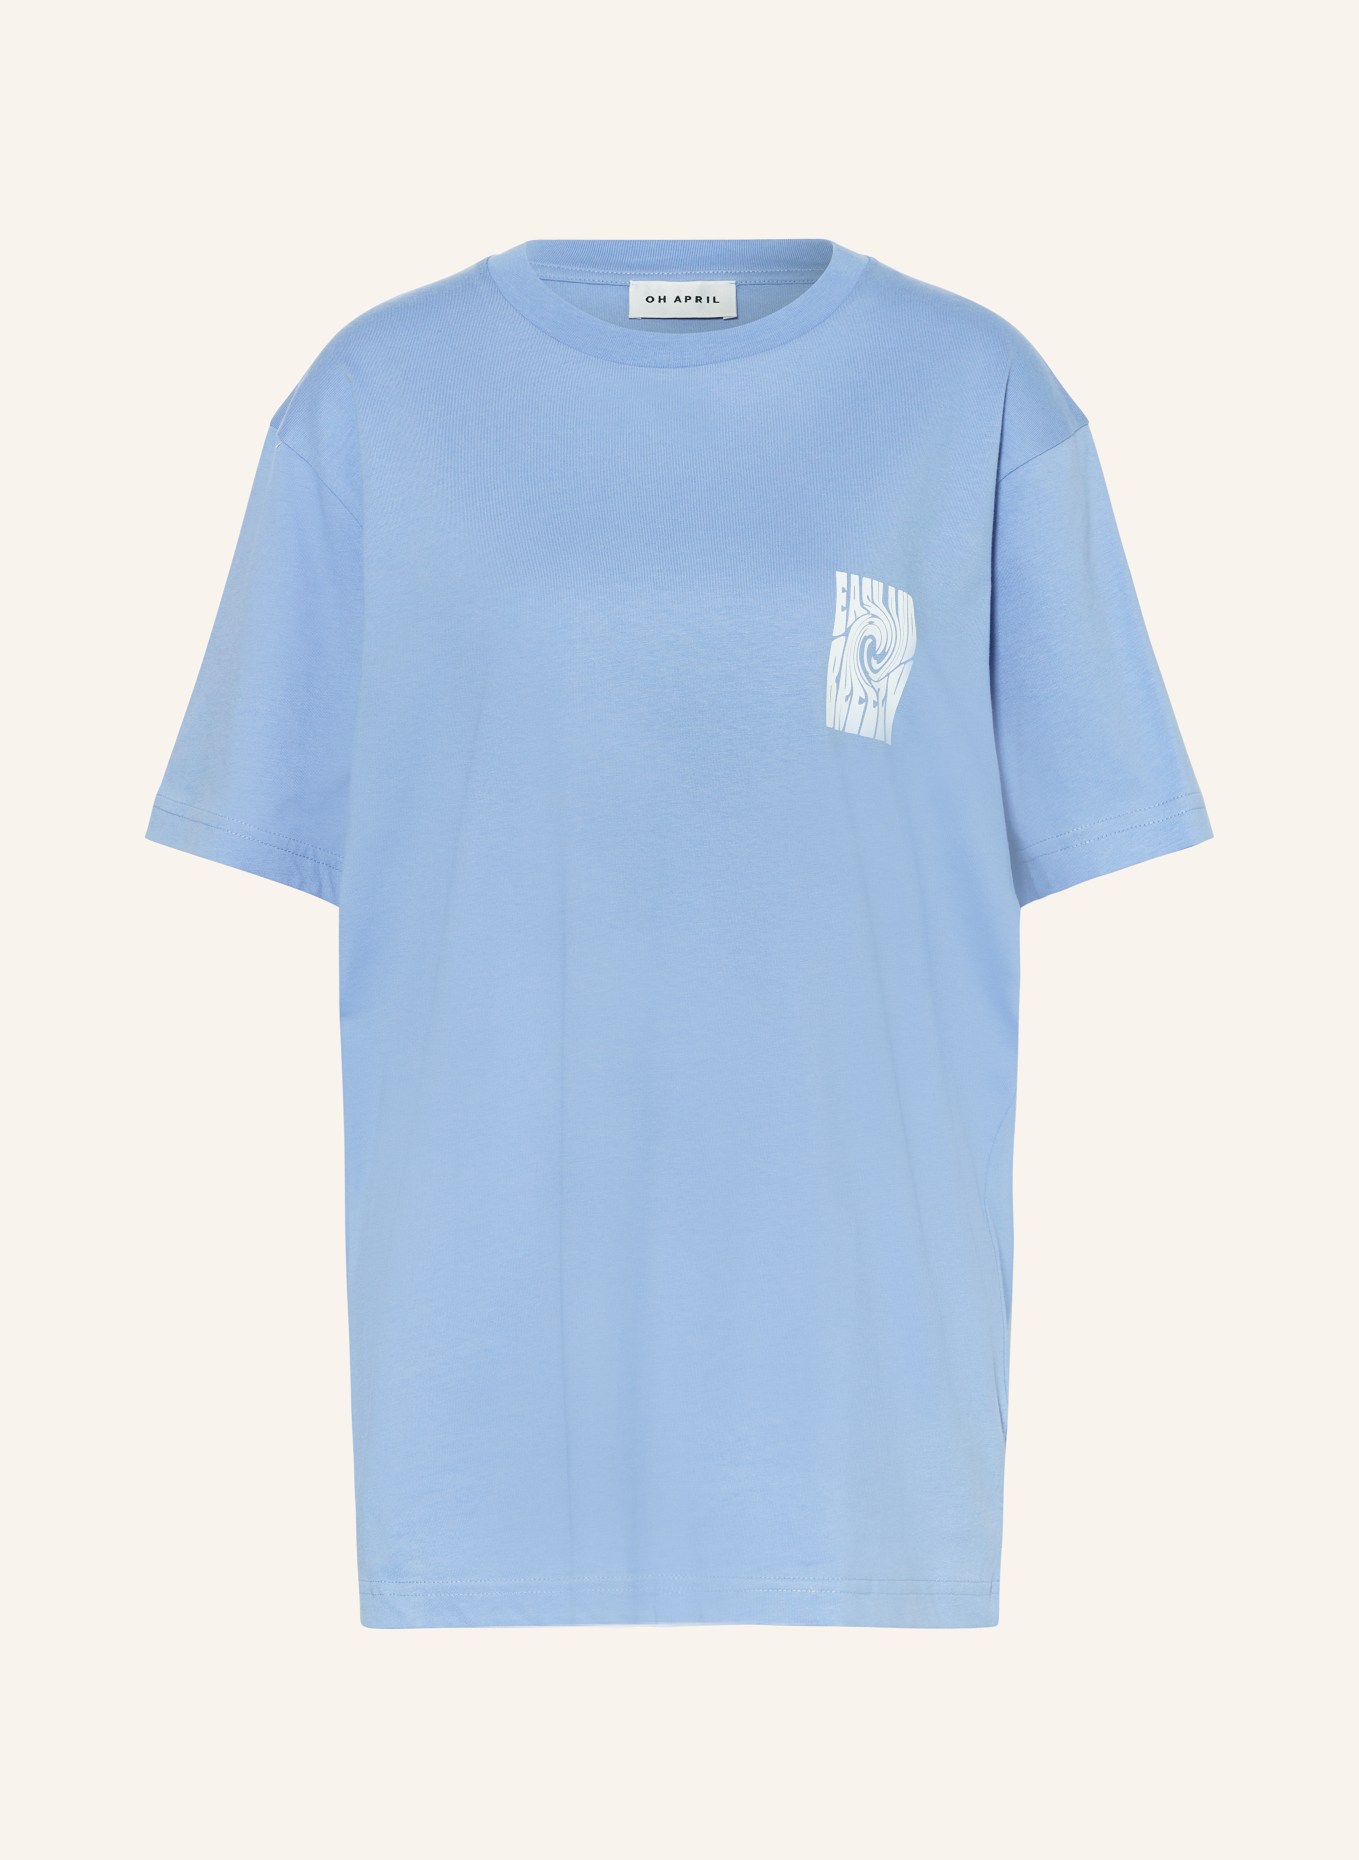 OH APRIL T-Shirt BOYFRIEND, Farbe: BLAU/ WEISS (Bild 1)